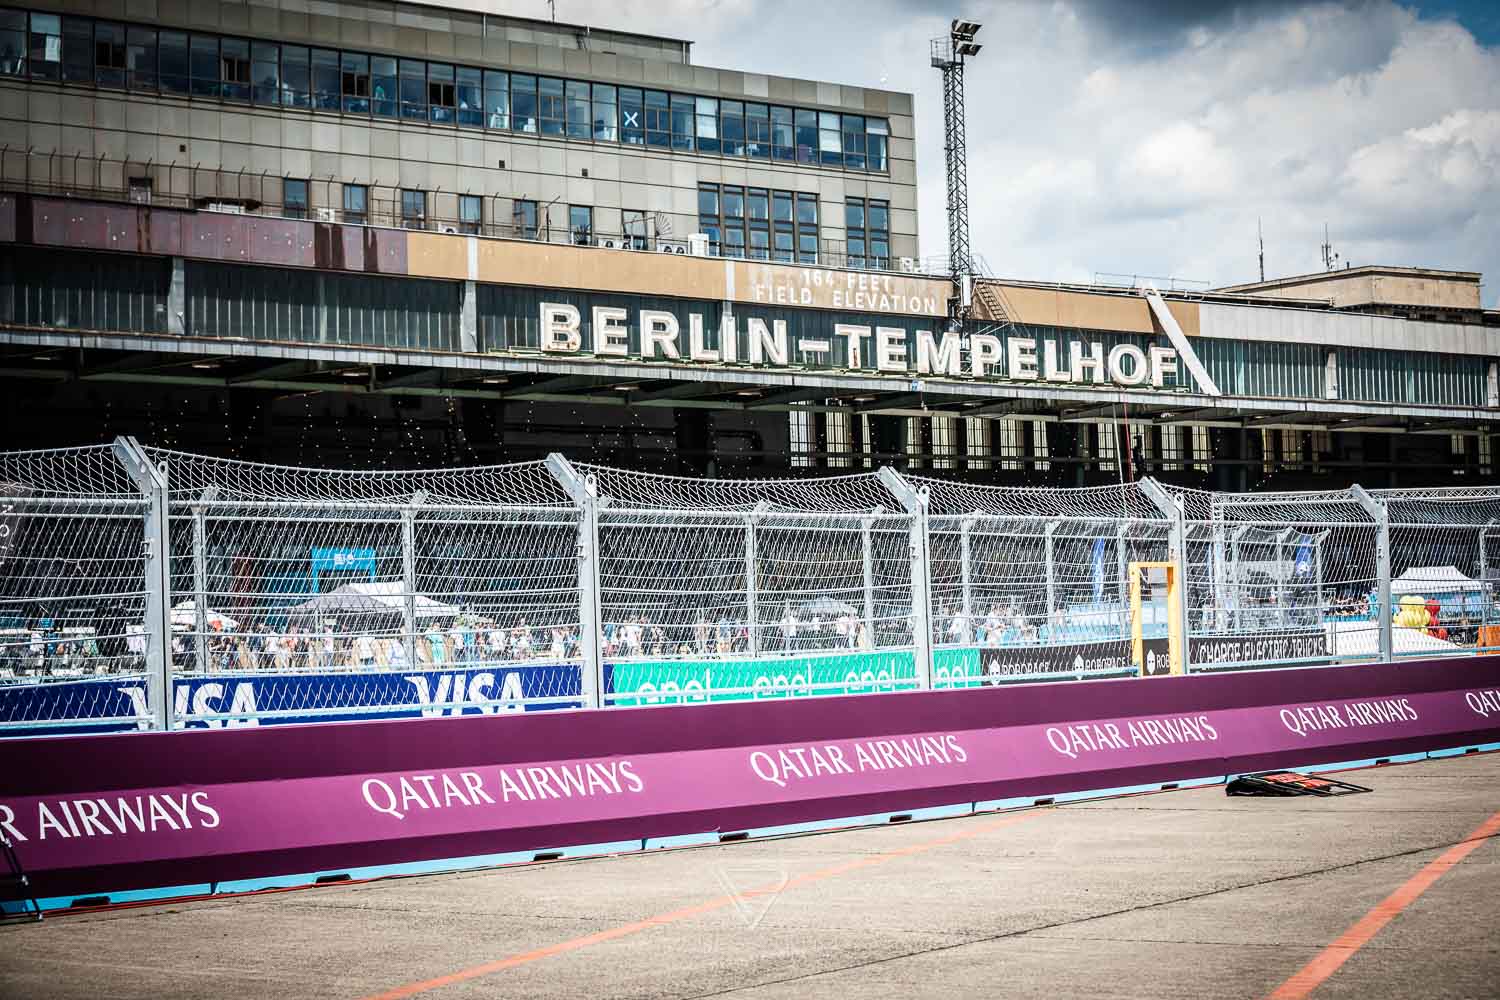 Formel E Rennen in Berlin - Flughafen Tempelhof - VIP bei MS Amlin Andretti Racing Team - FIA Formula E - Electric Streetracing - Grid Girl - Speed Event Motorsport Event Blogger